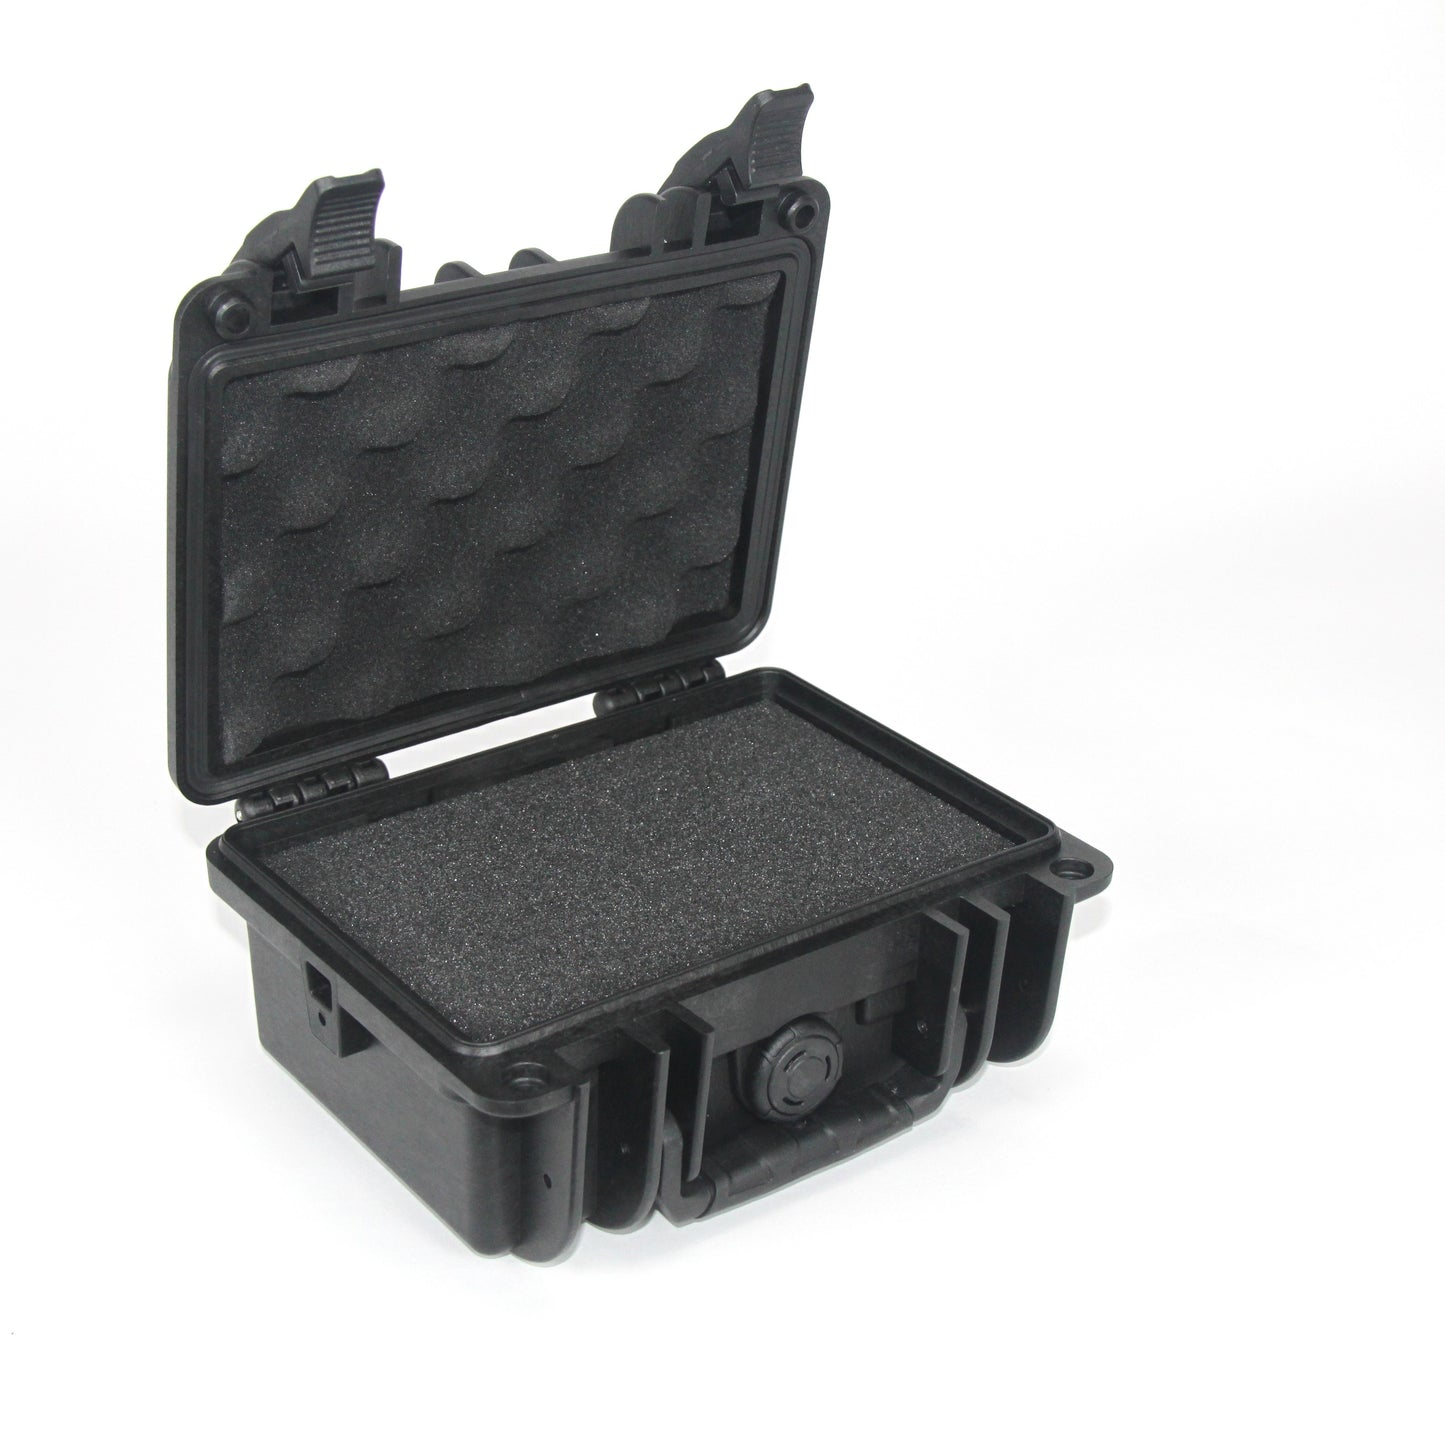 Glass Fiber Steel Framed Locking Gun Case Lock Box Waterproof Storage Carry Case